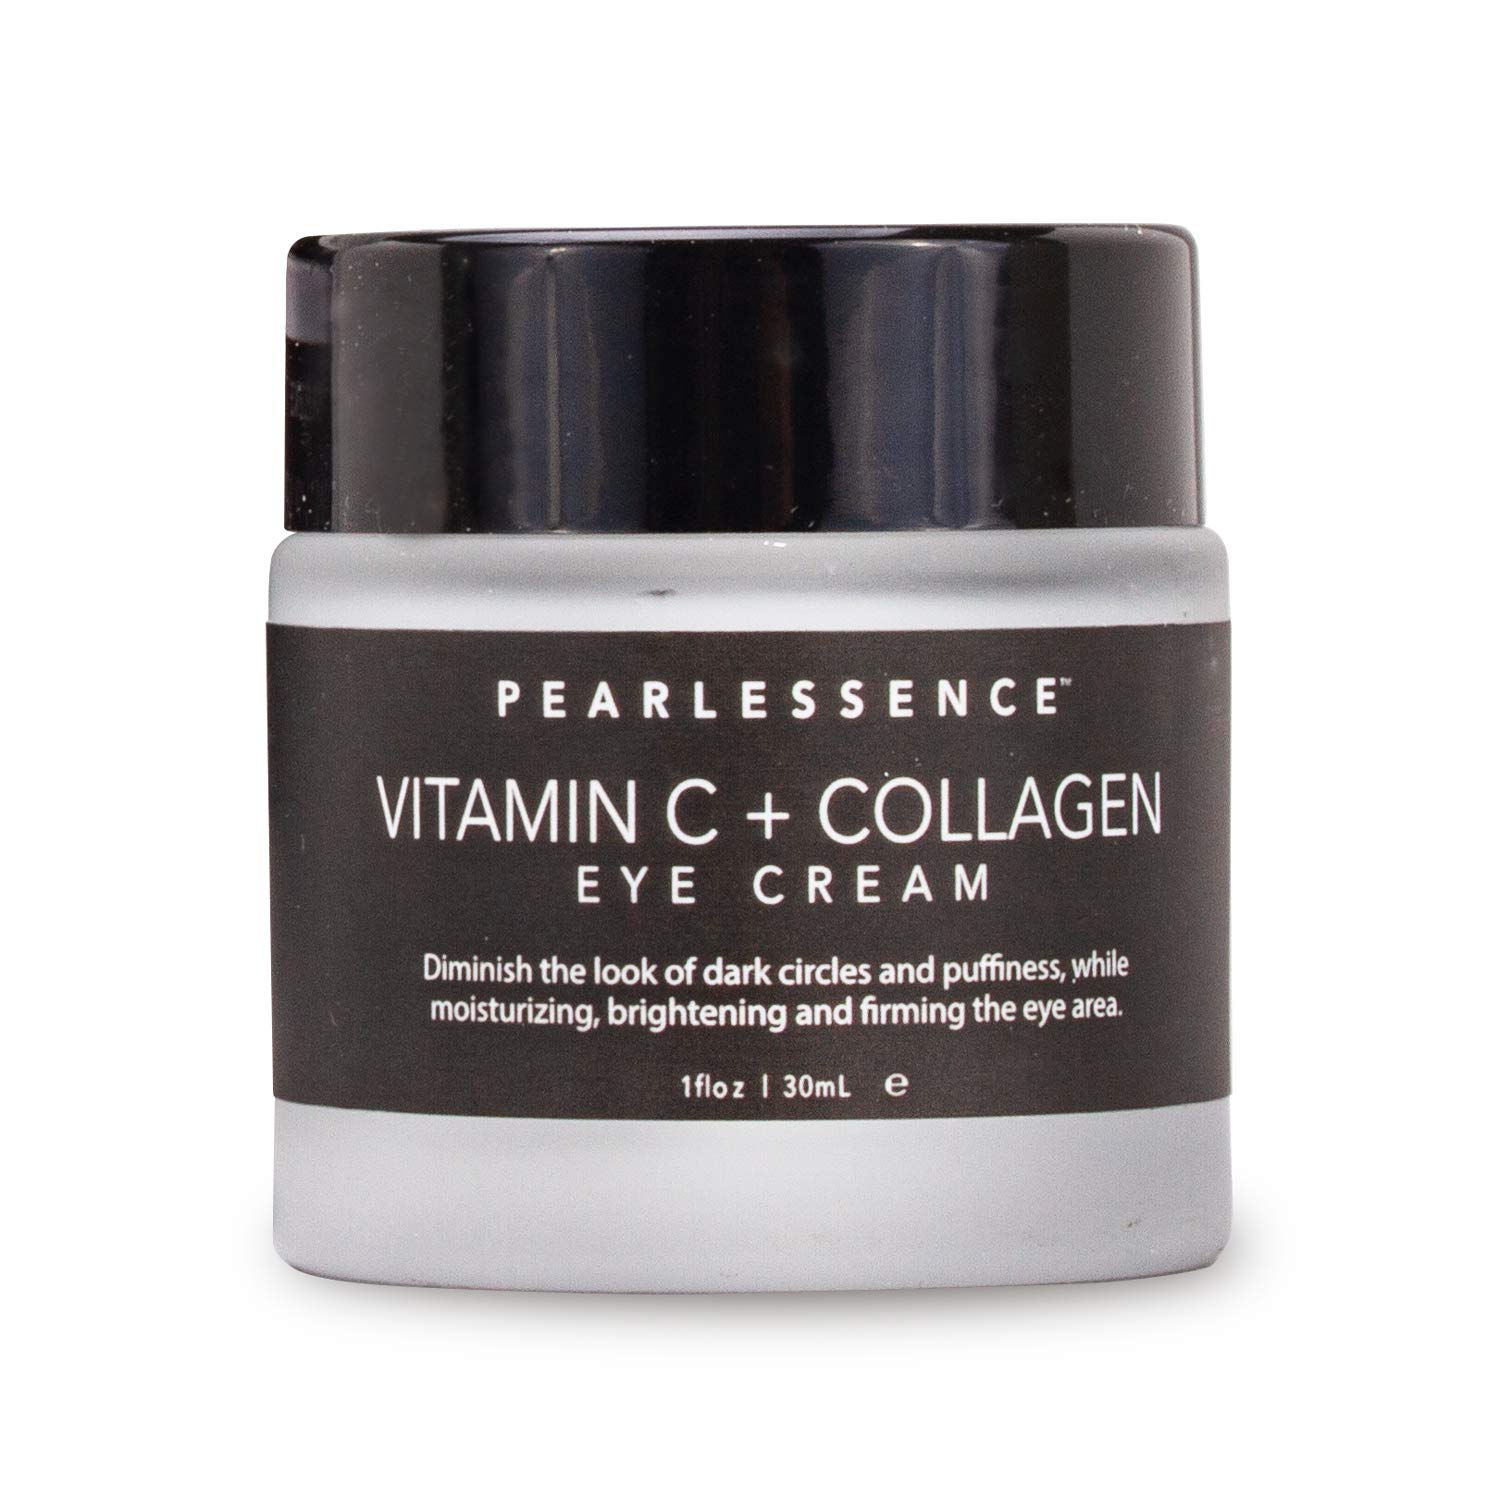 Pearlessence Vitamin C + Collagen Eye Cream | Helps Reduce Puffiness & Diminish Look of Dark Circles | Moisturizing to Brighten & Firm Eyes | Made in USA & Cruelty Free (1oz)